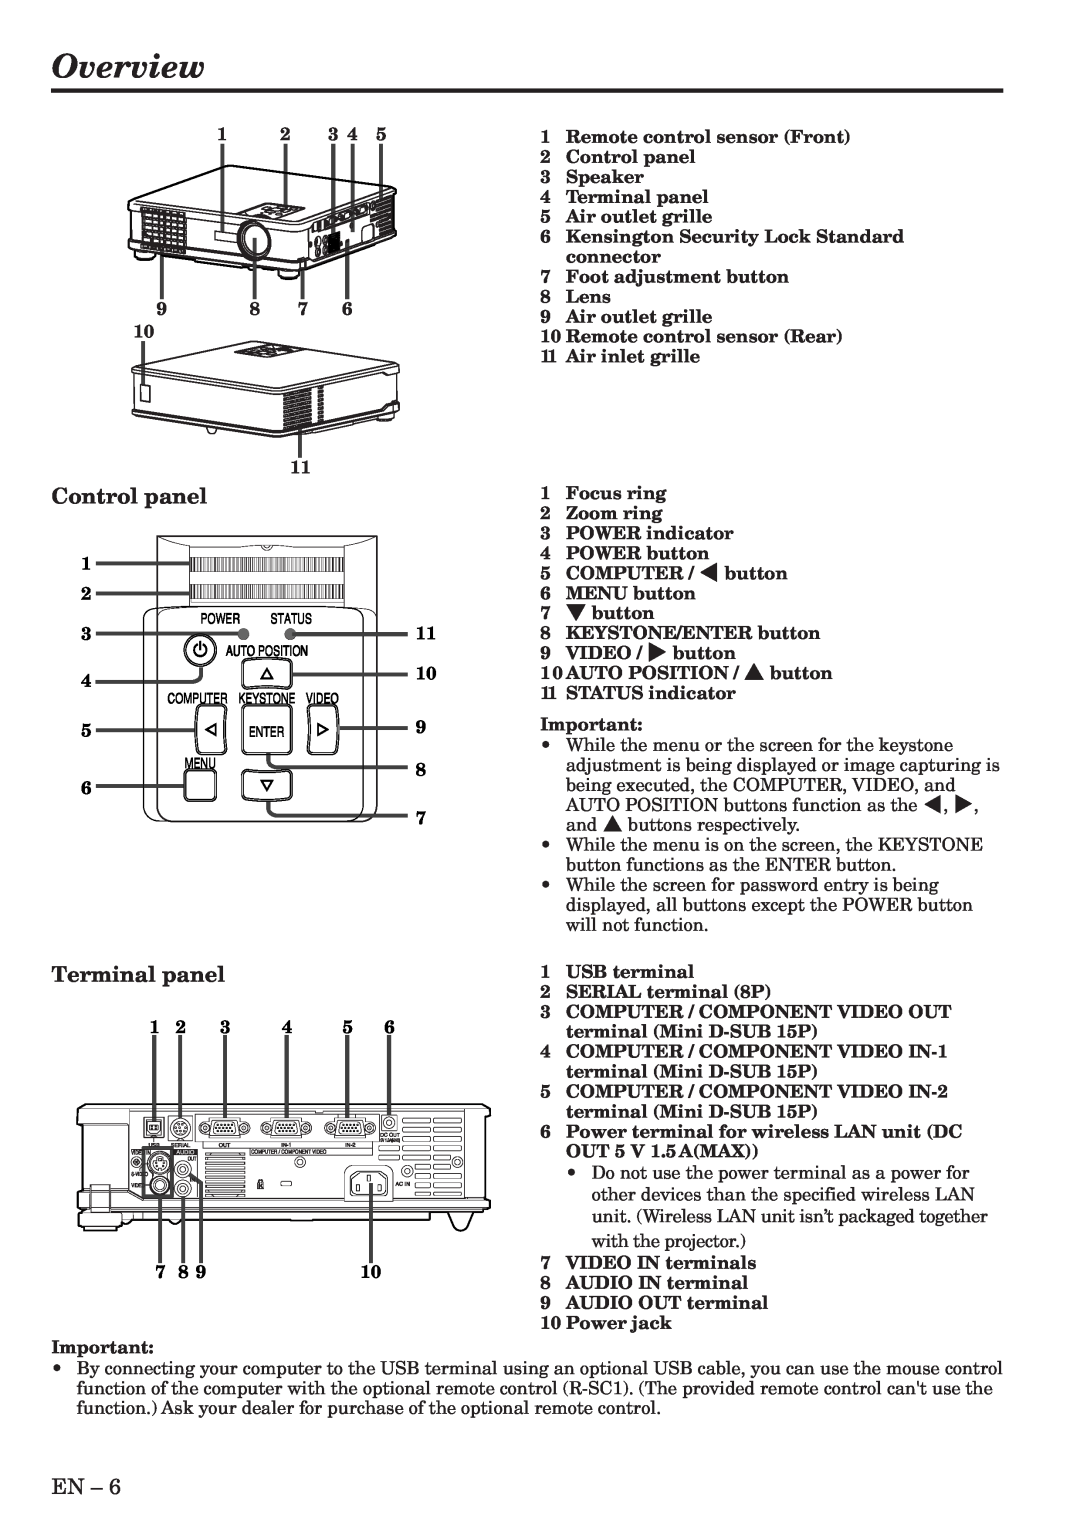 Mitsubishi Electronics XL6U user manual Overview, Control panel, Terminal panel 